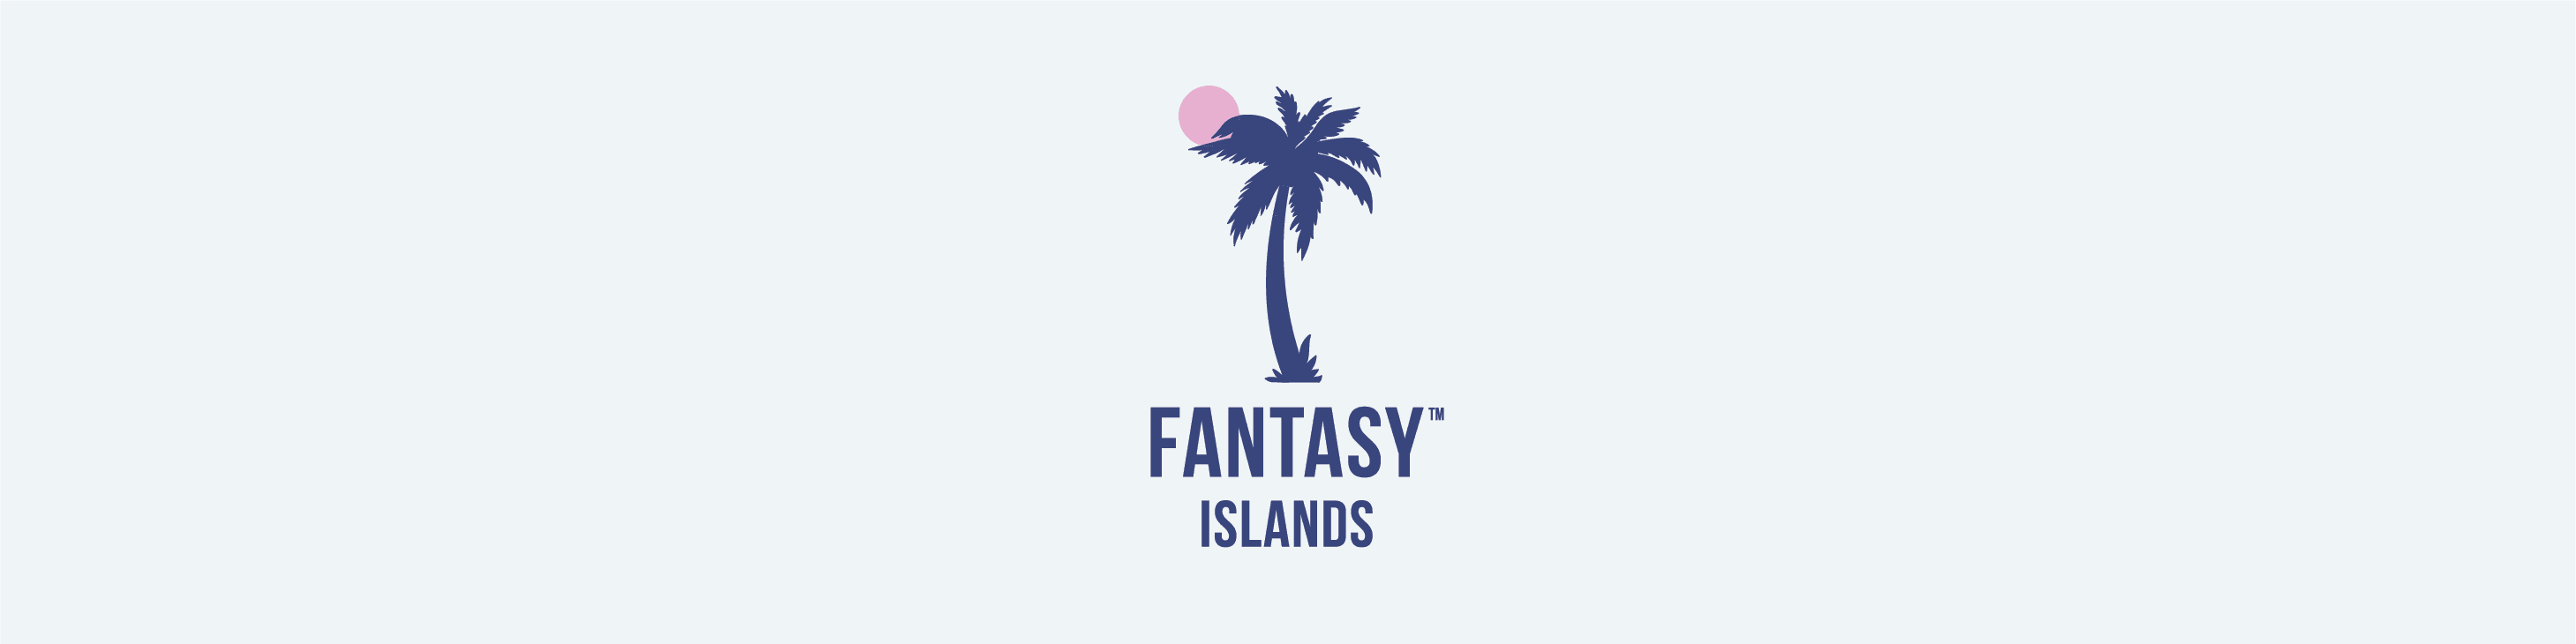 Fantasy Islands Access Keys